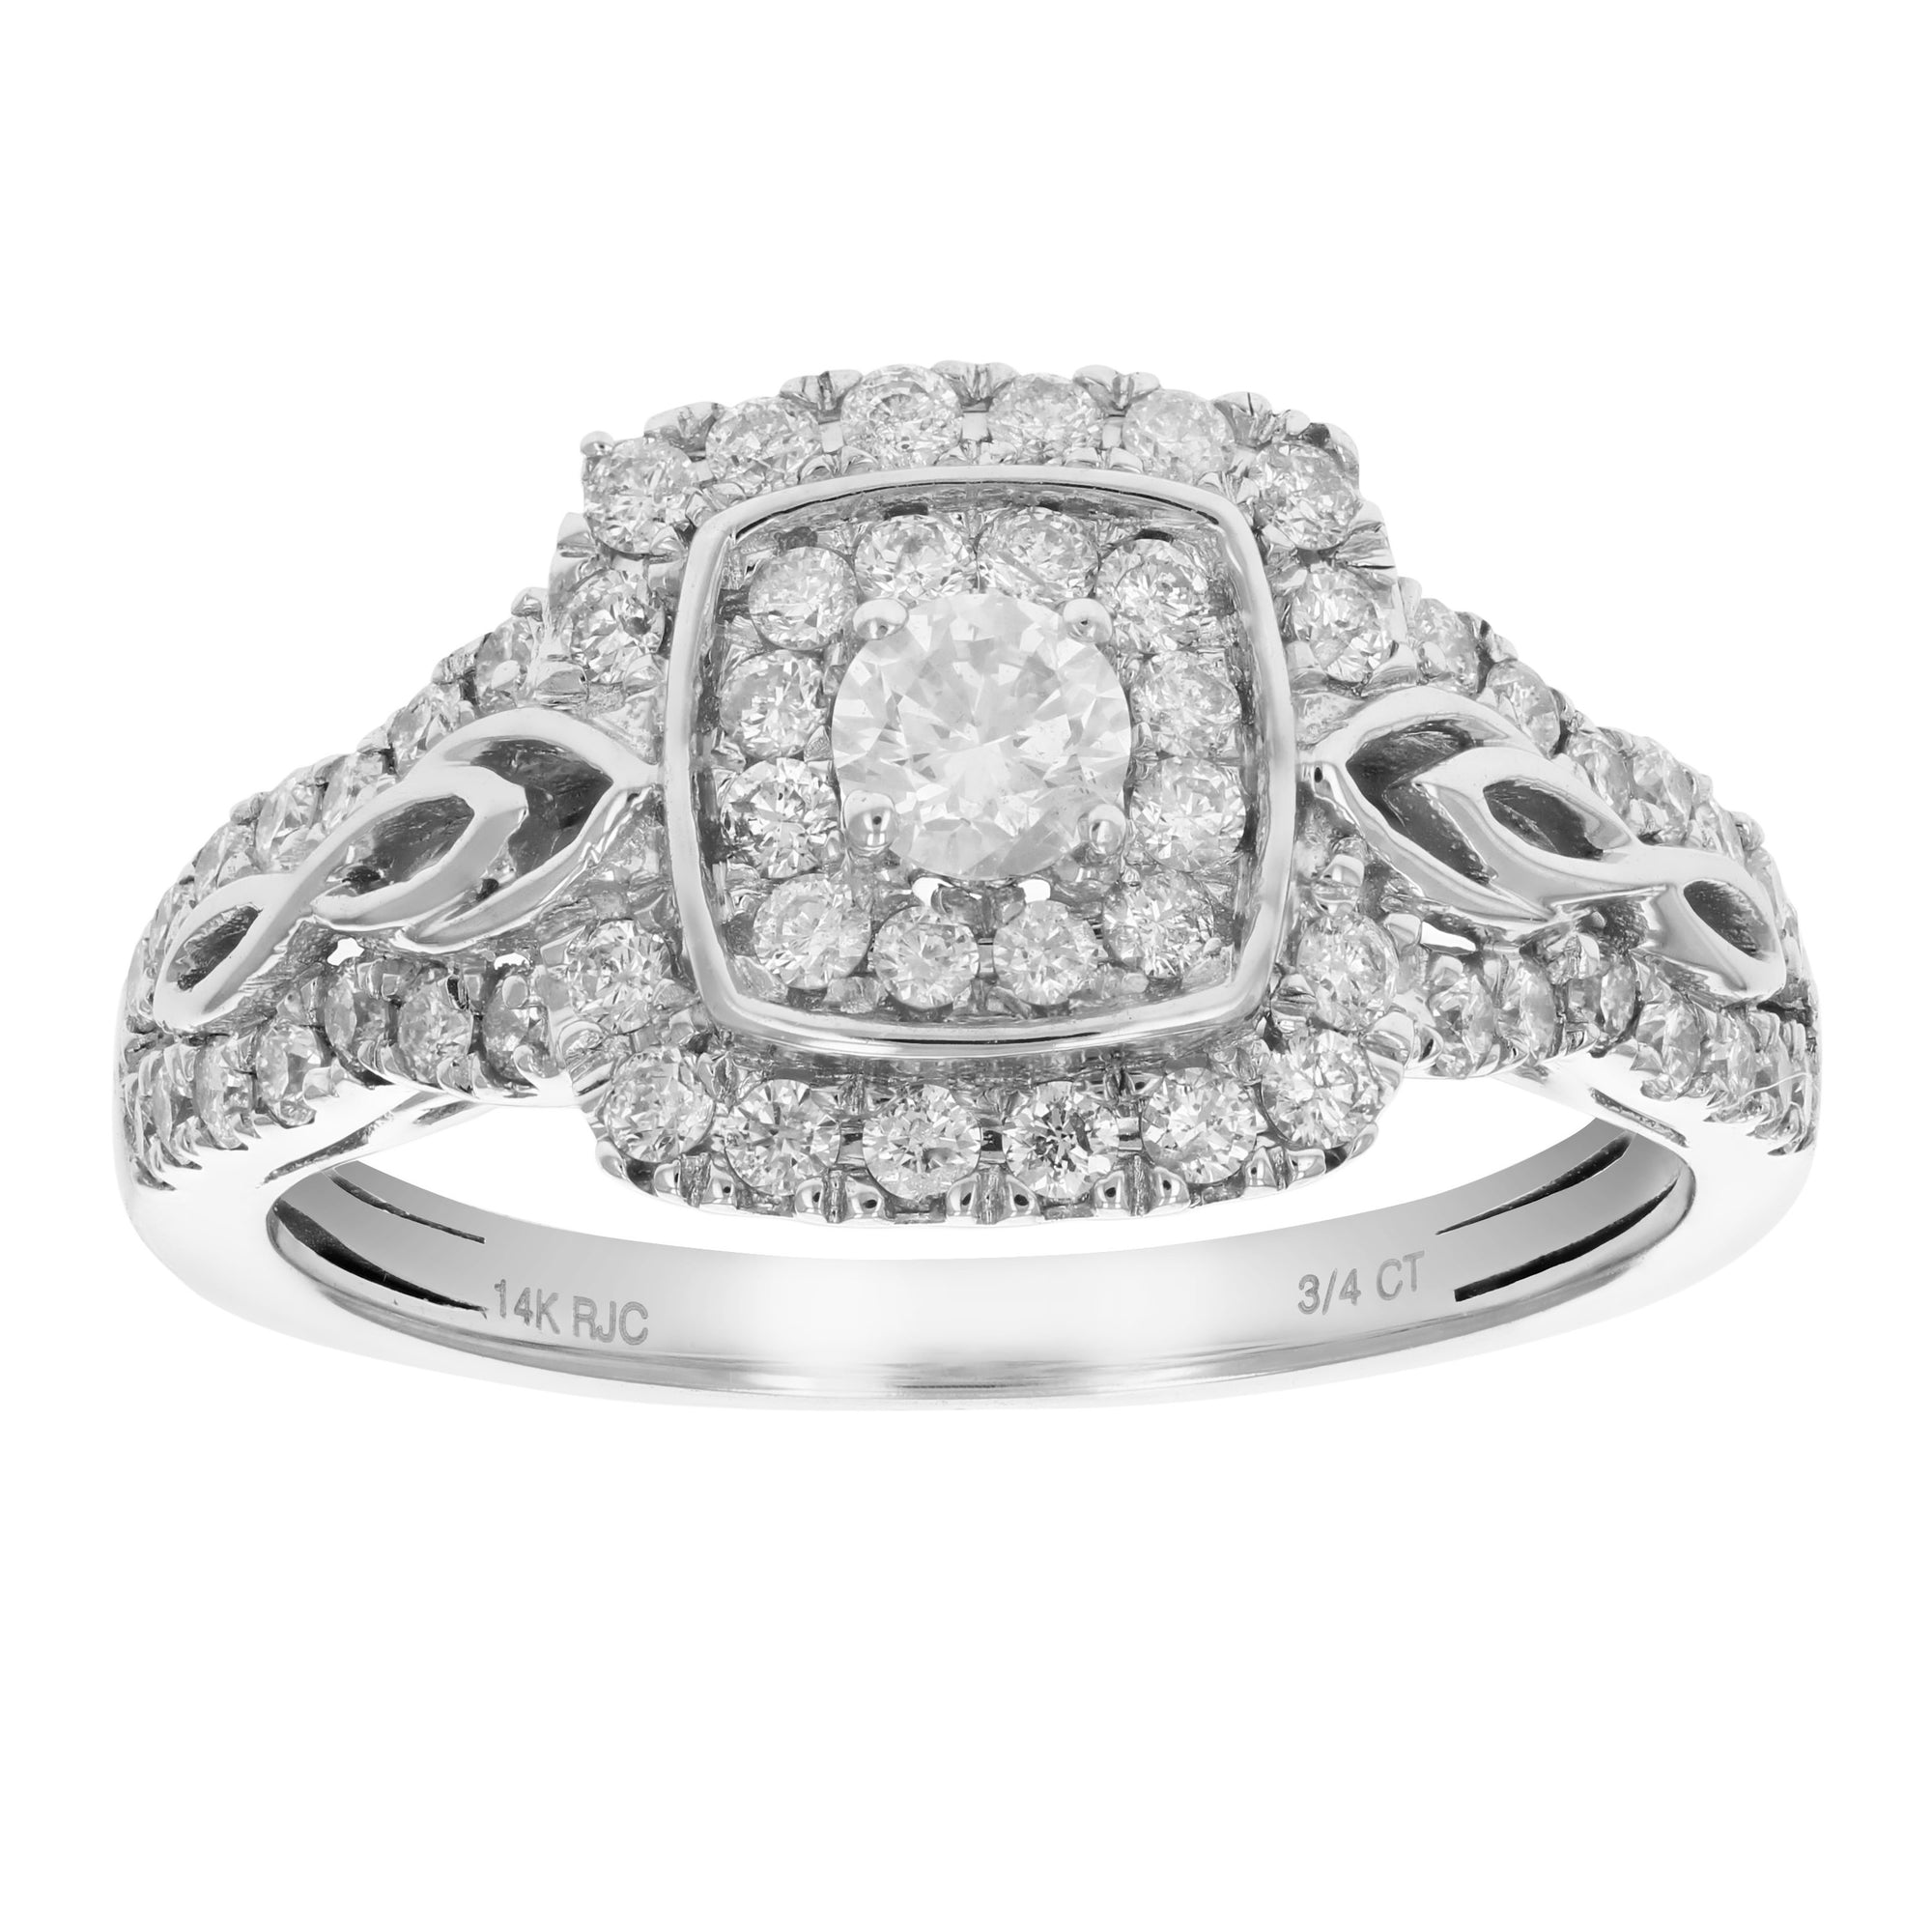 3/4 cttw Diamond Engagement Ring 14K White Gold Halo Composite Prong Set